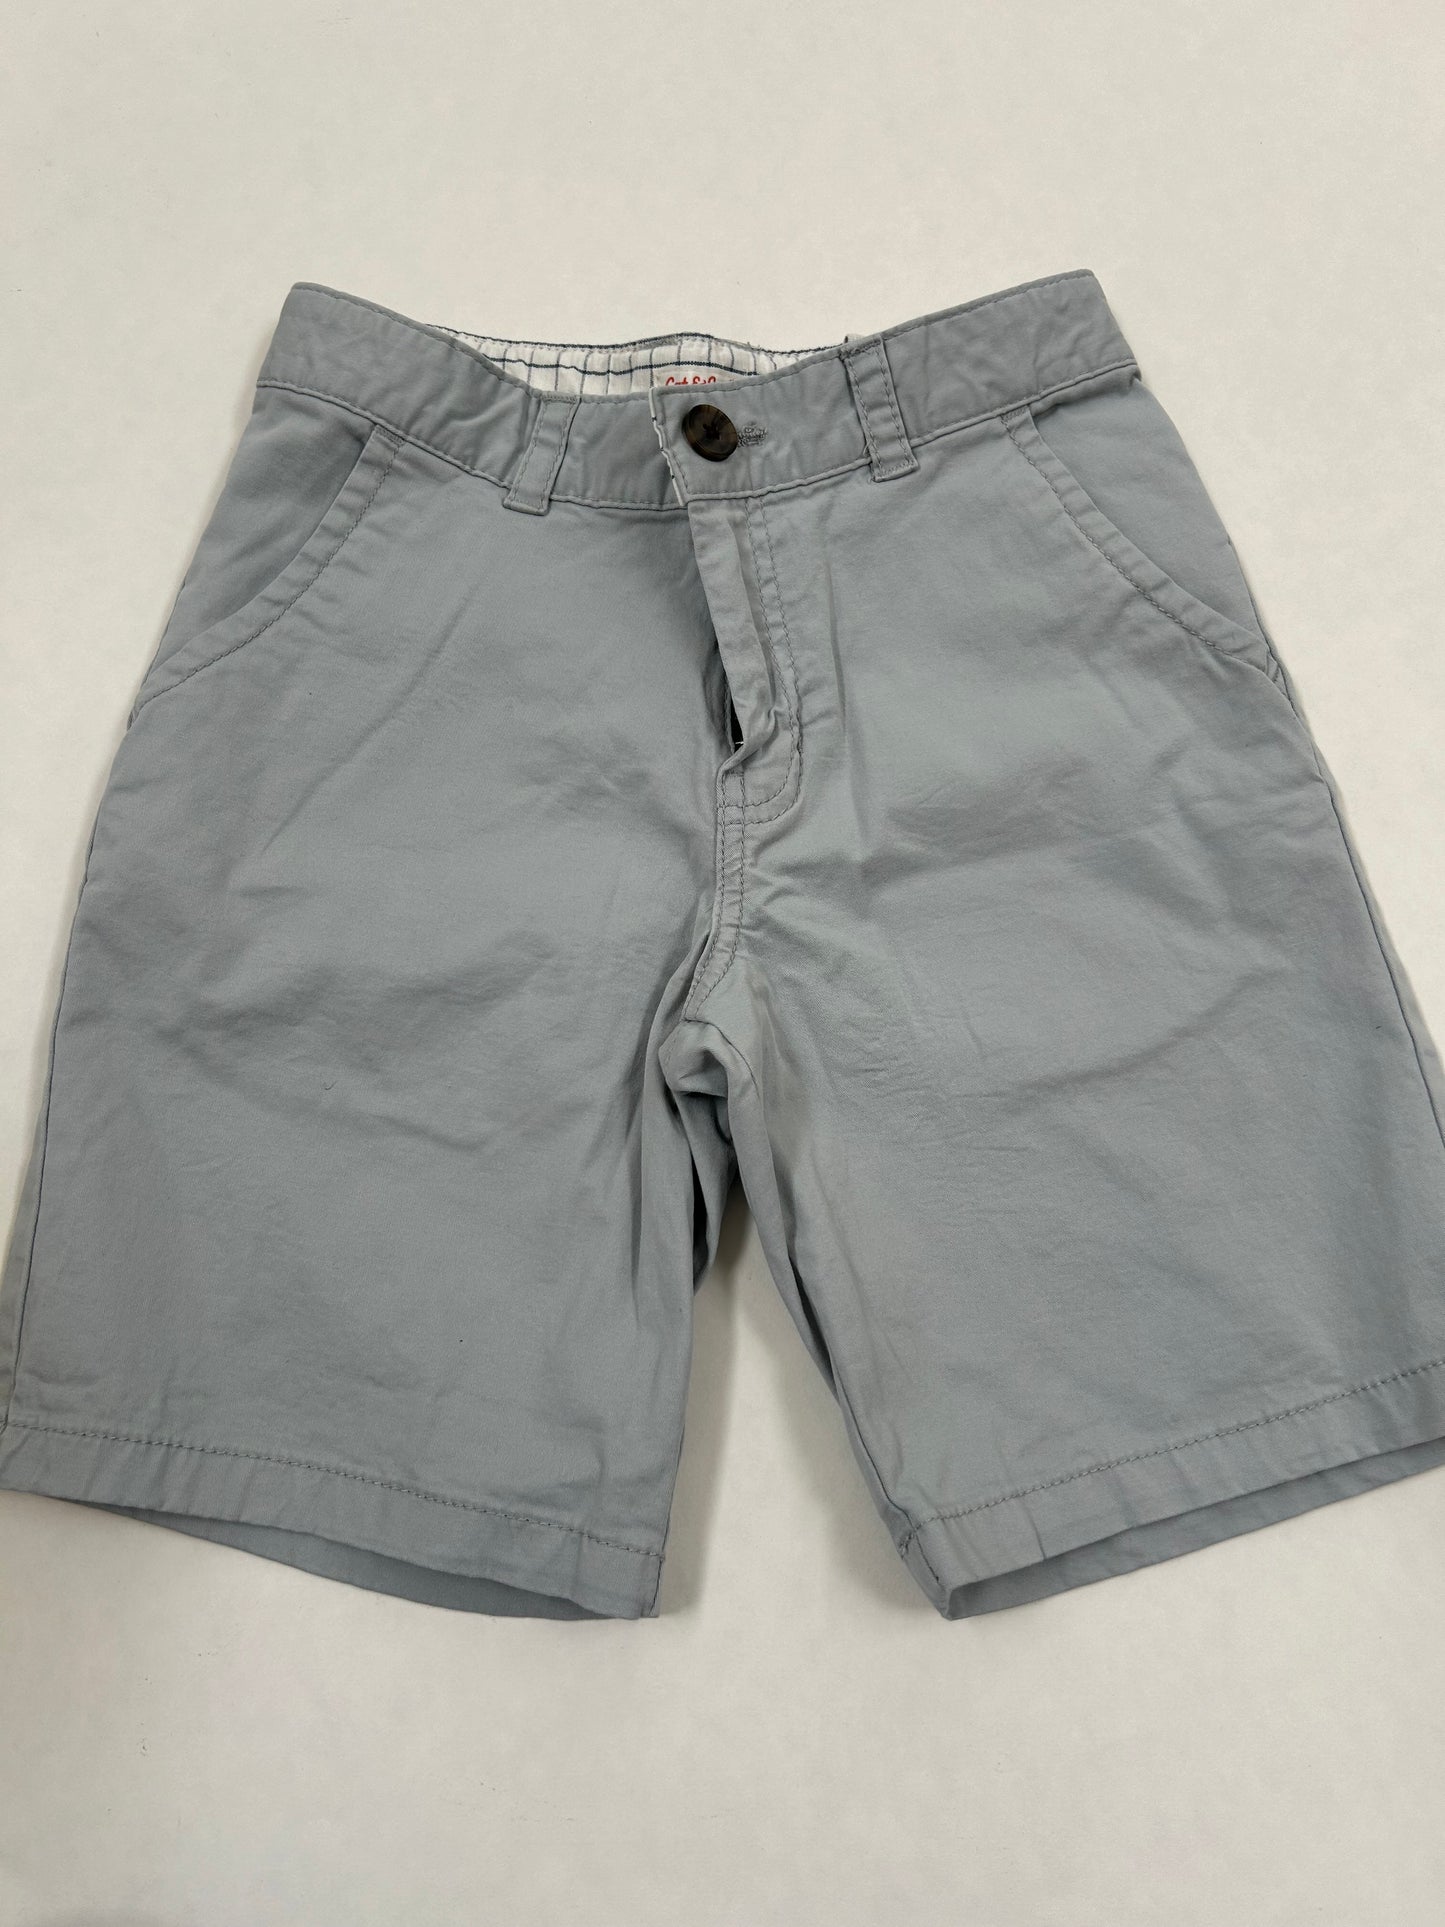 Boys size 10 Cat & Jack light gray adjustable waist flat front shorts